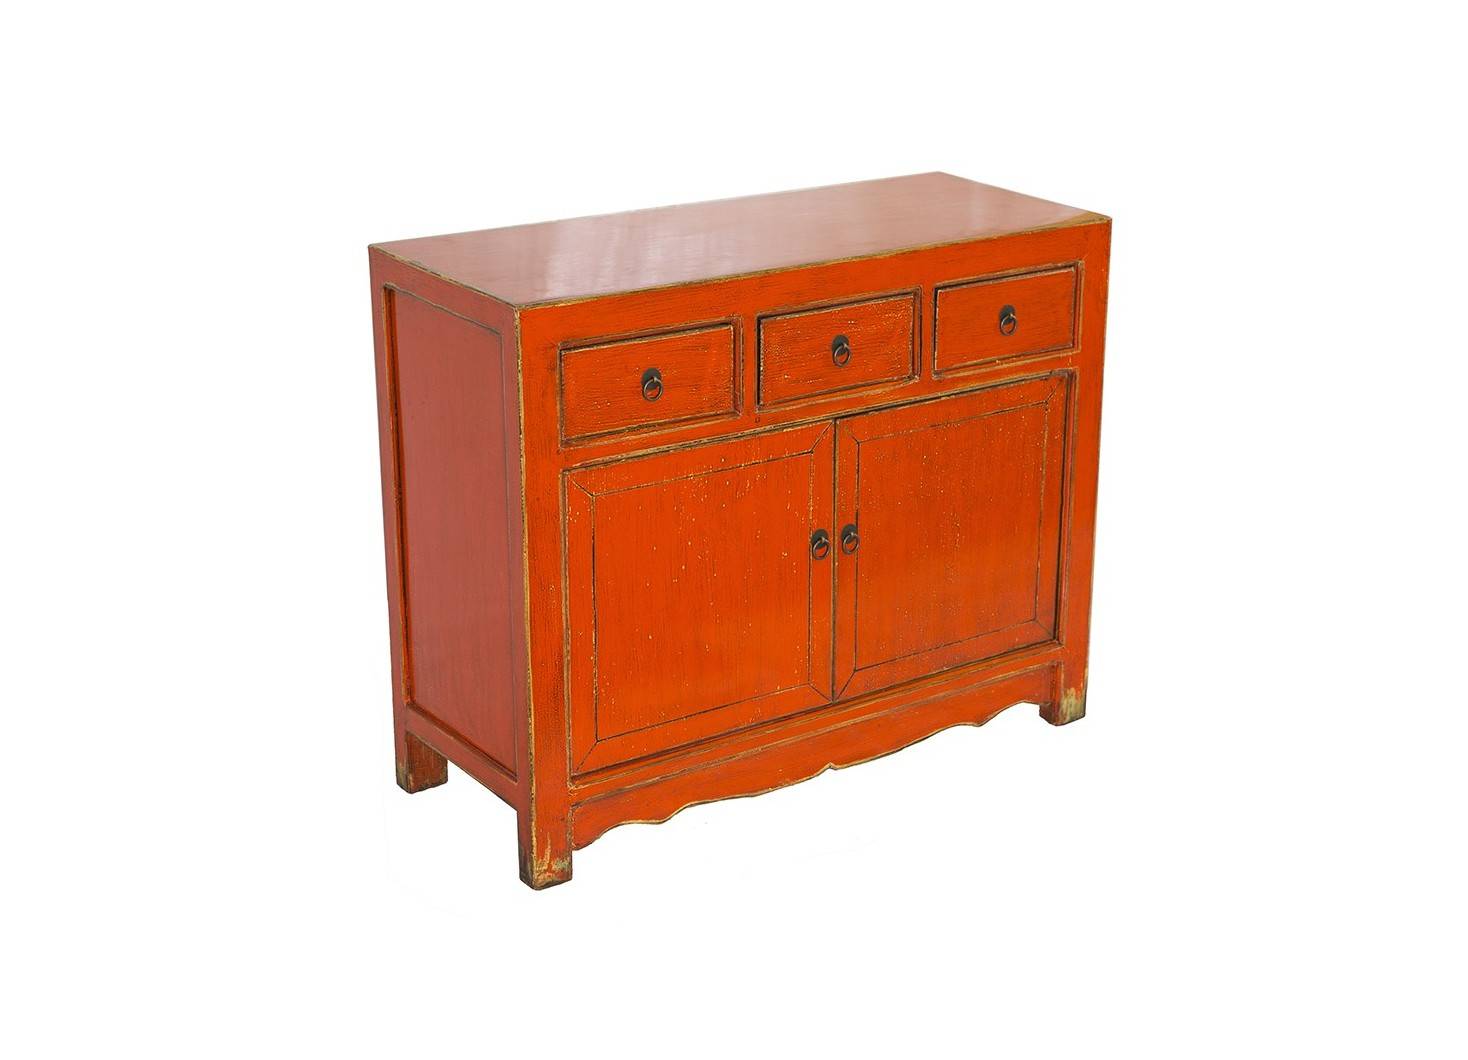 Chinese sideboard - 2 doors 3 drawers - Orange